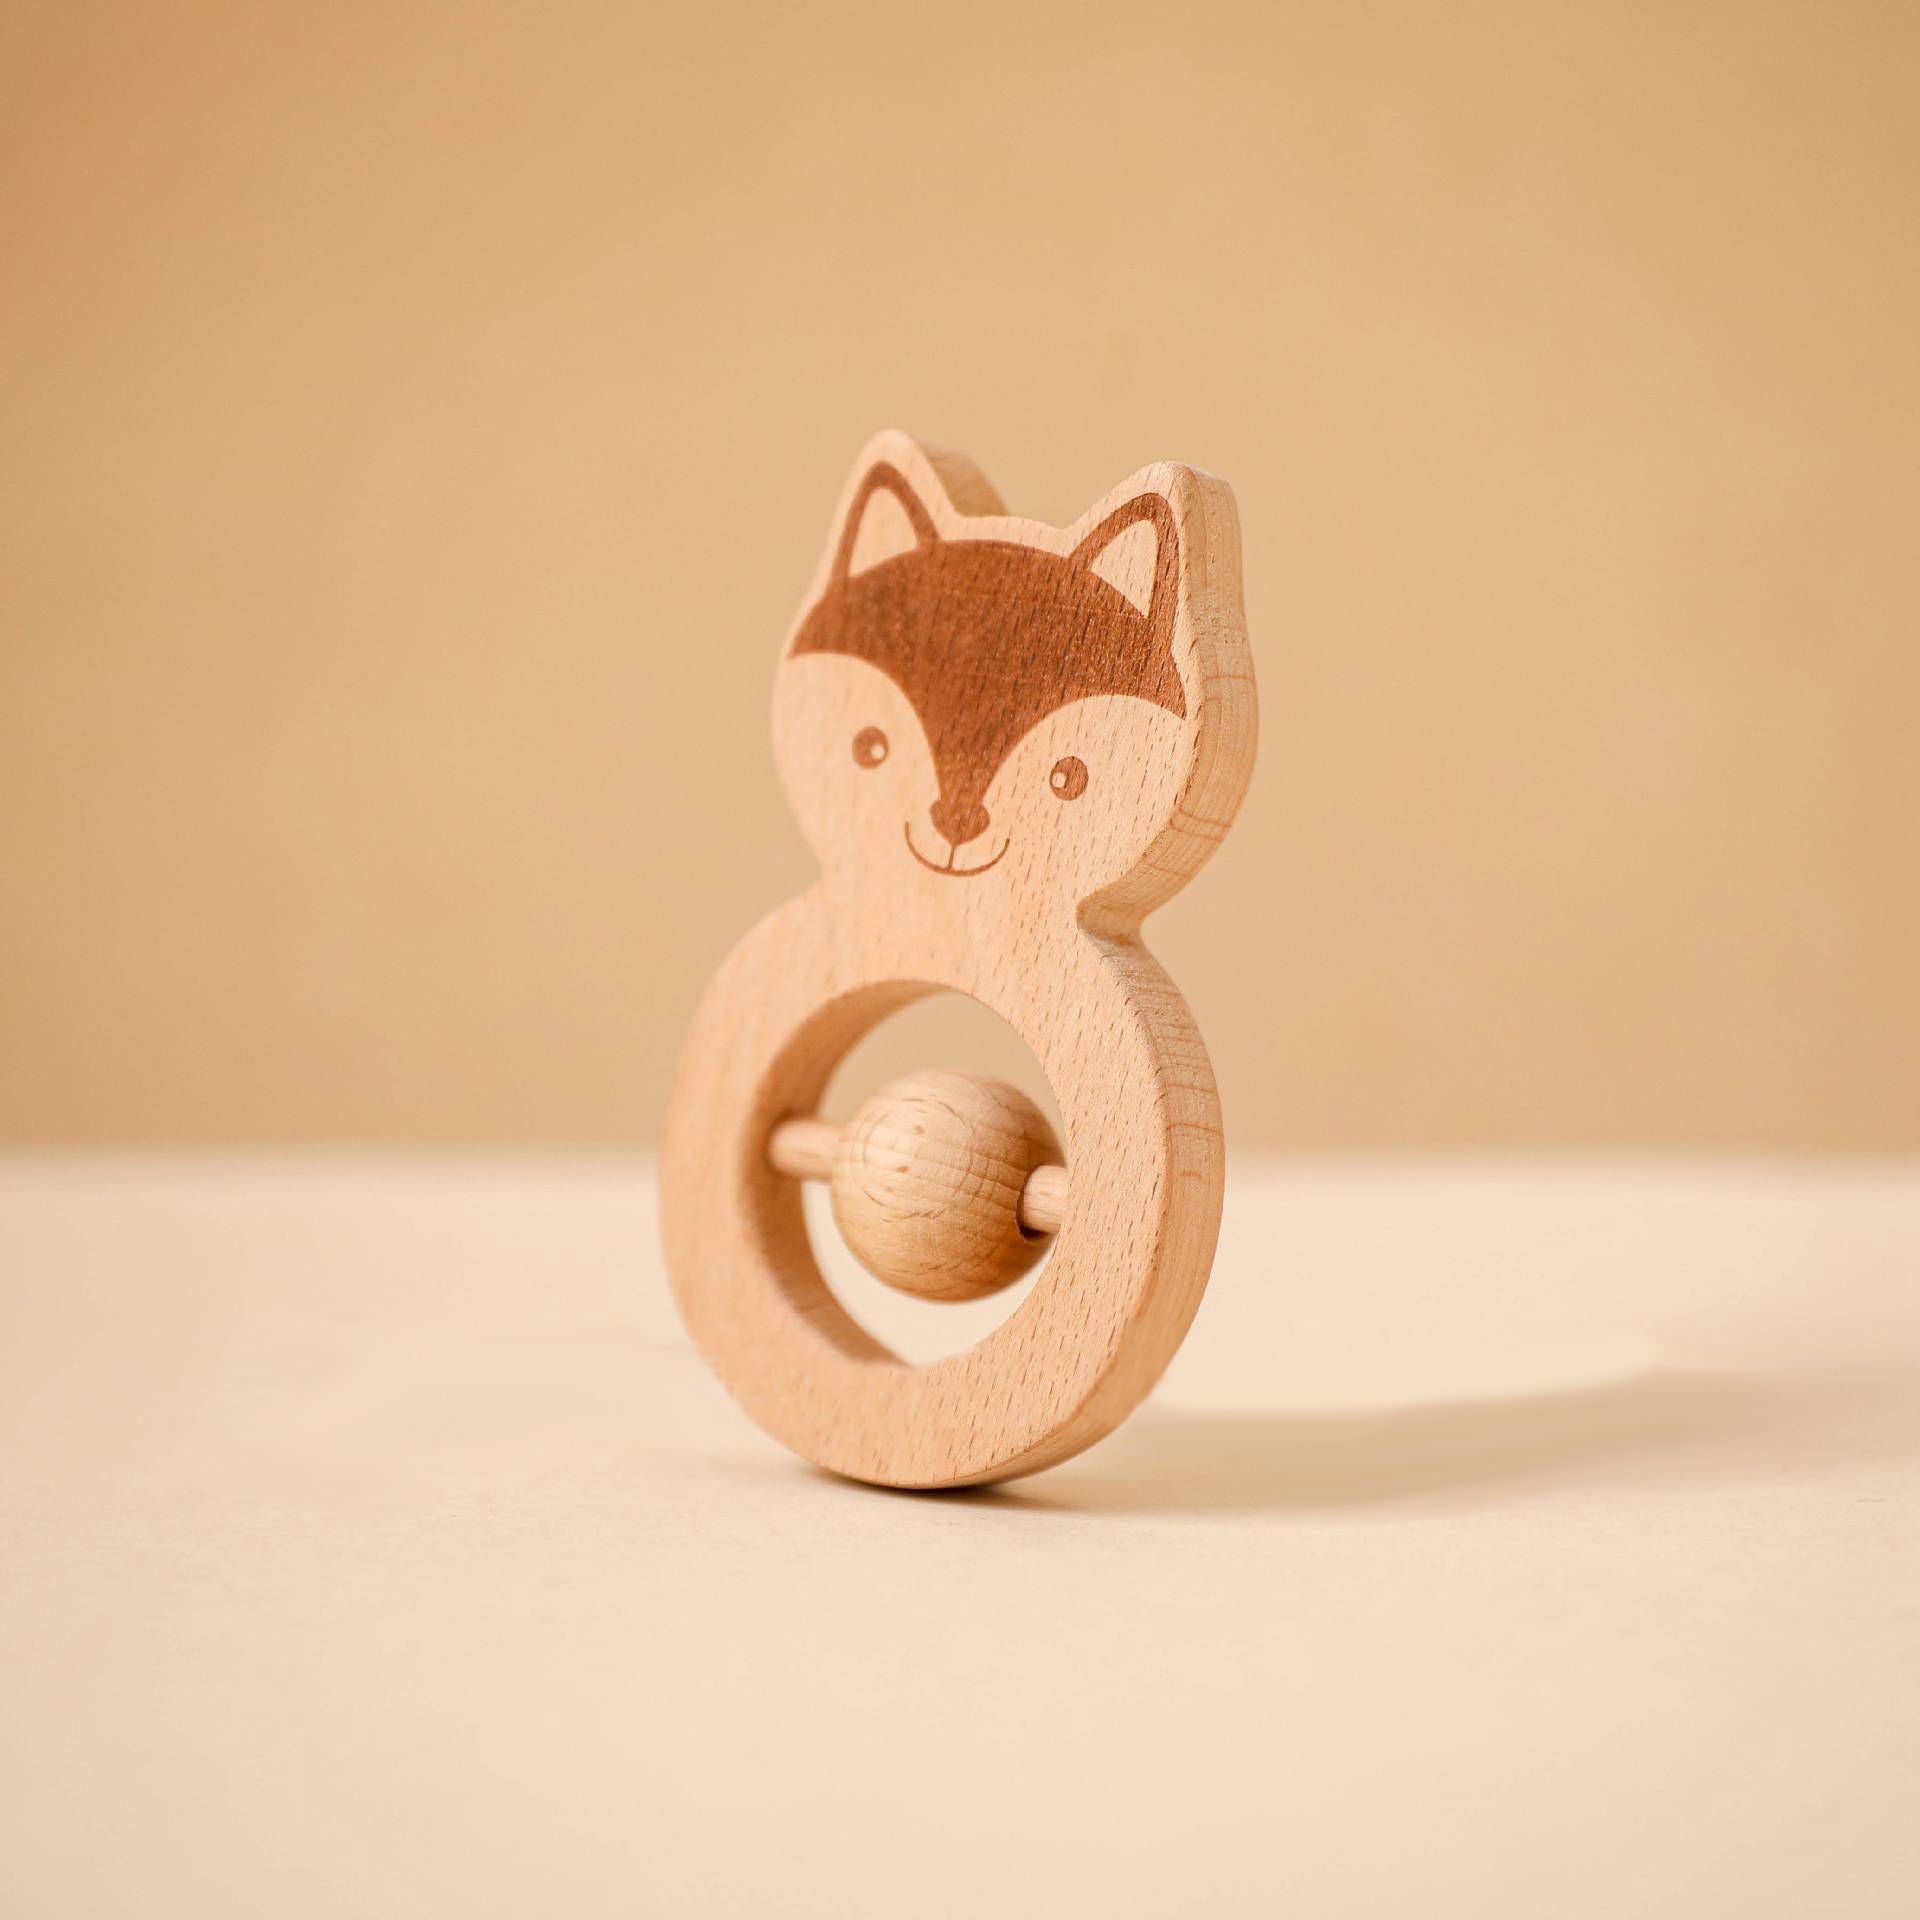 Wooden Fox, Koala Round Rattle, Teether Perfect baby gift